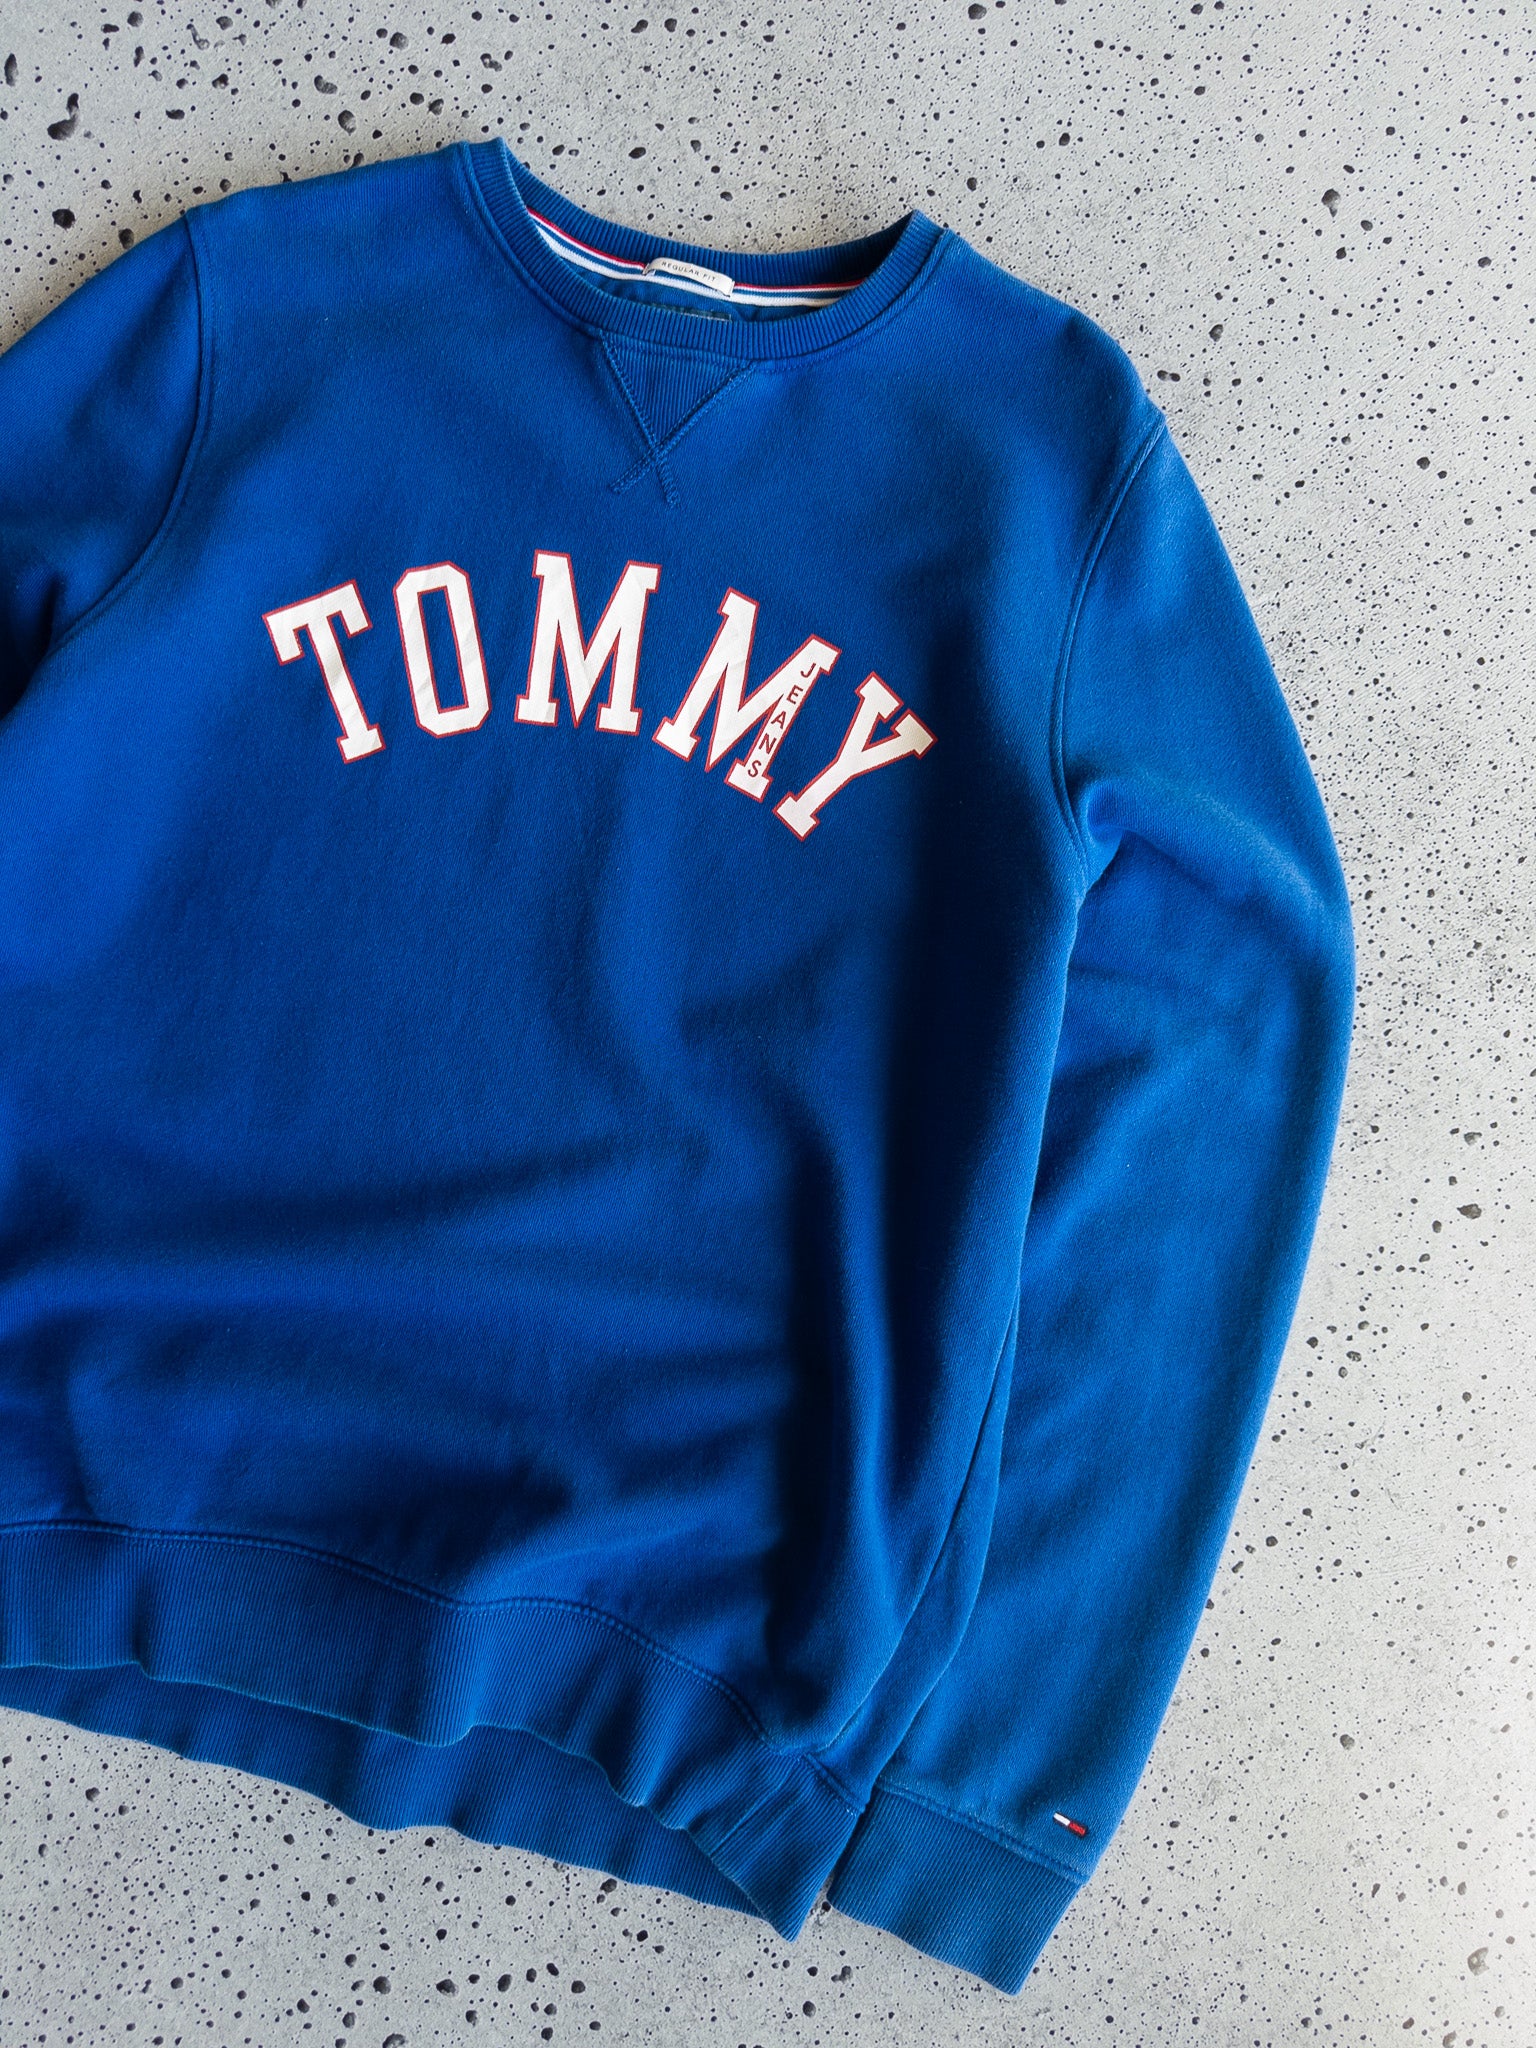 Vintage Tommy Hilfiger Sweatshirt (L)